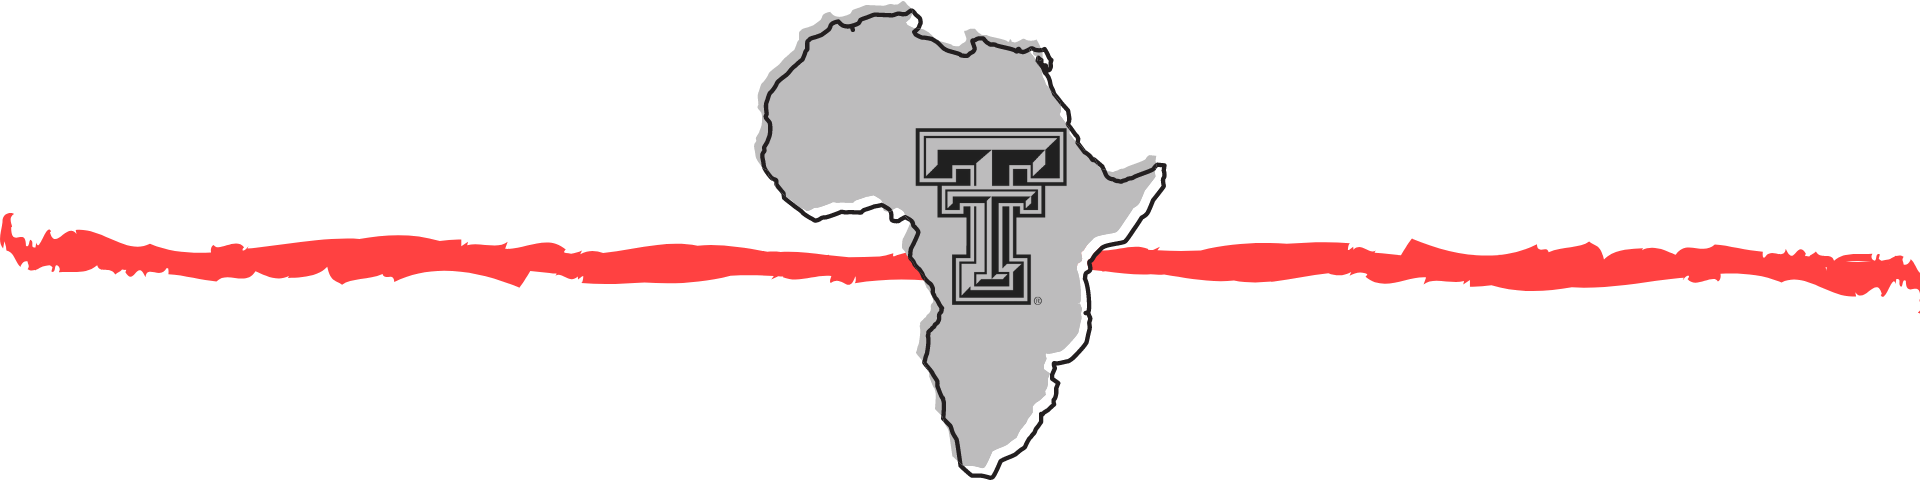 TTU Logo inside Africa